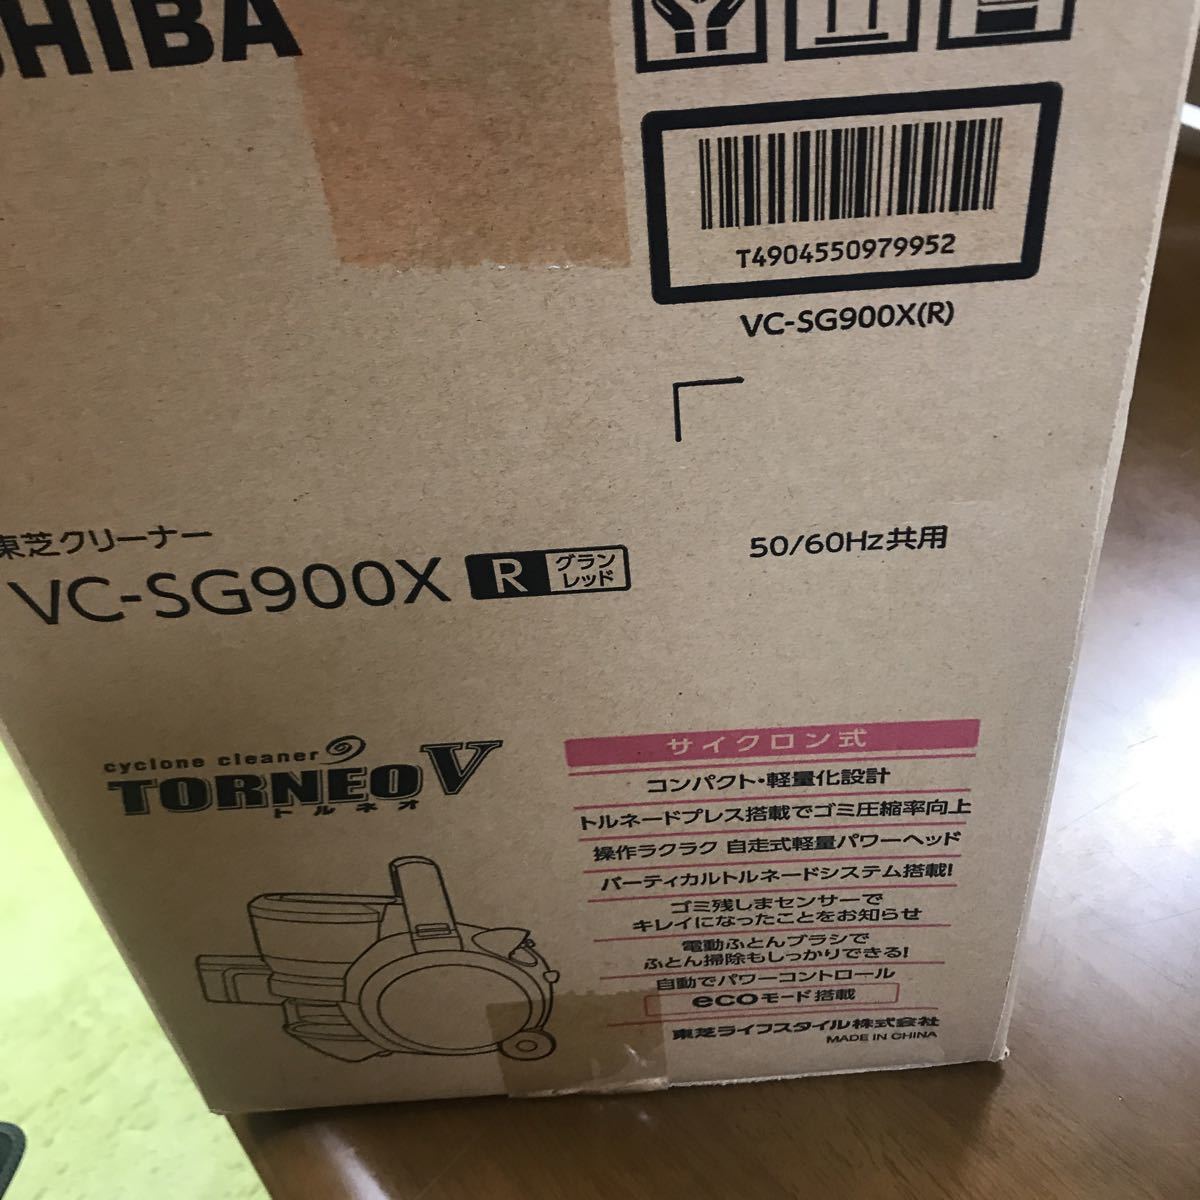  Toshiba Cyclone тип очиститель код тип самодвижение энергия щетка модель gran красный [ пылесос ]TOSHIBA TORNEO V( Torneo vi ) VC-SG900X-R